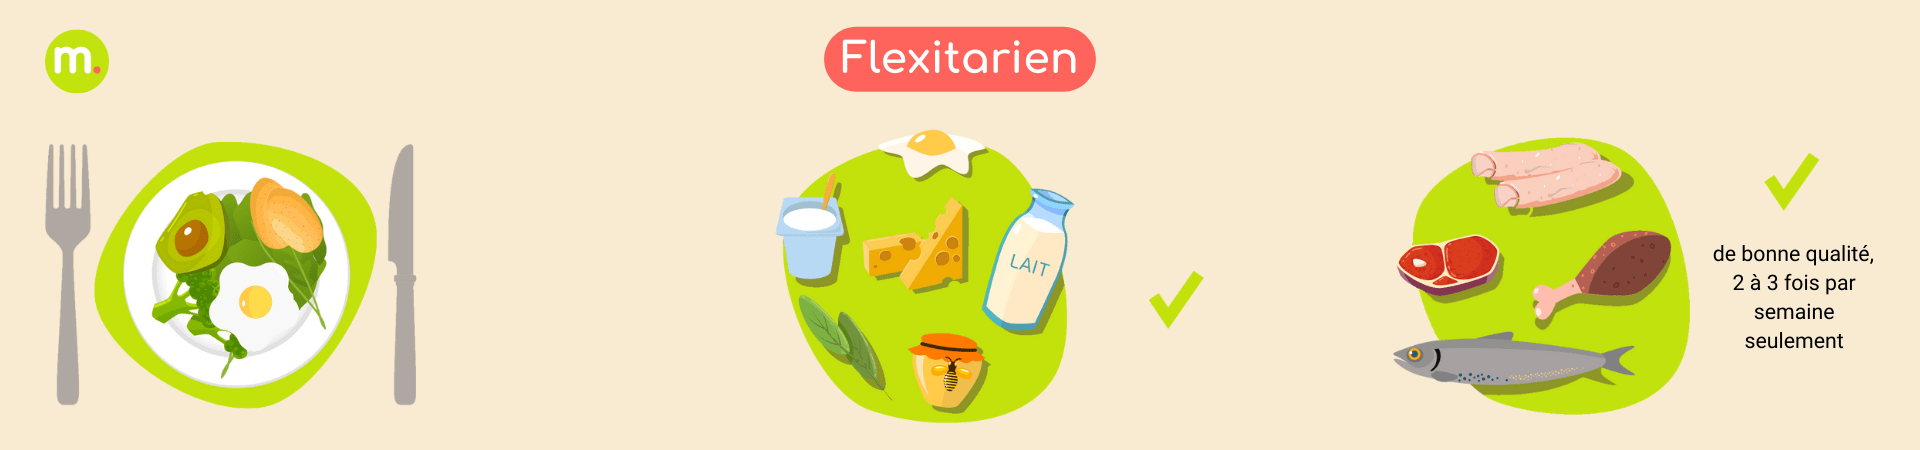 alimentation flexitarienne